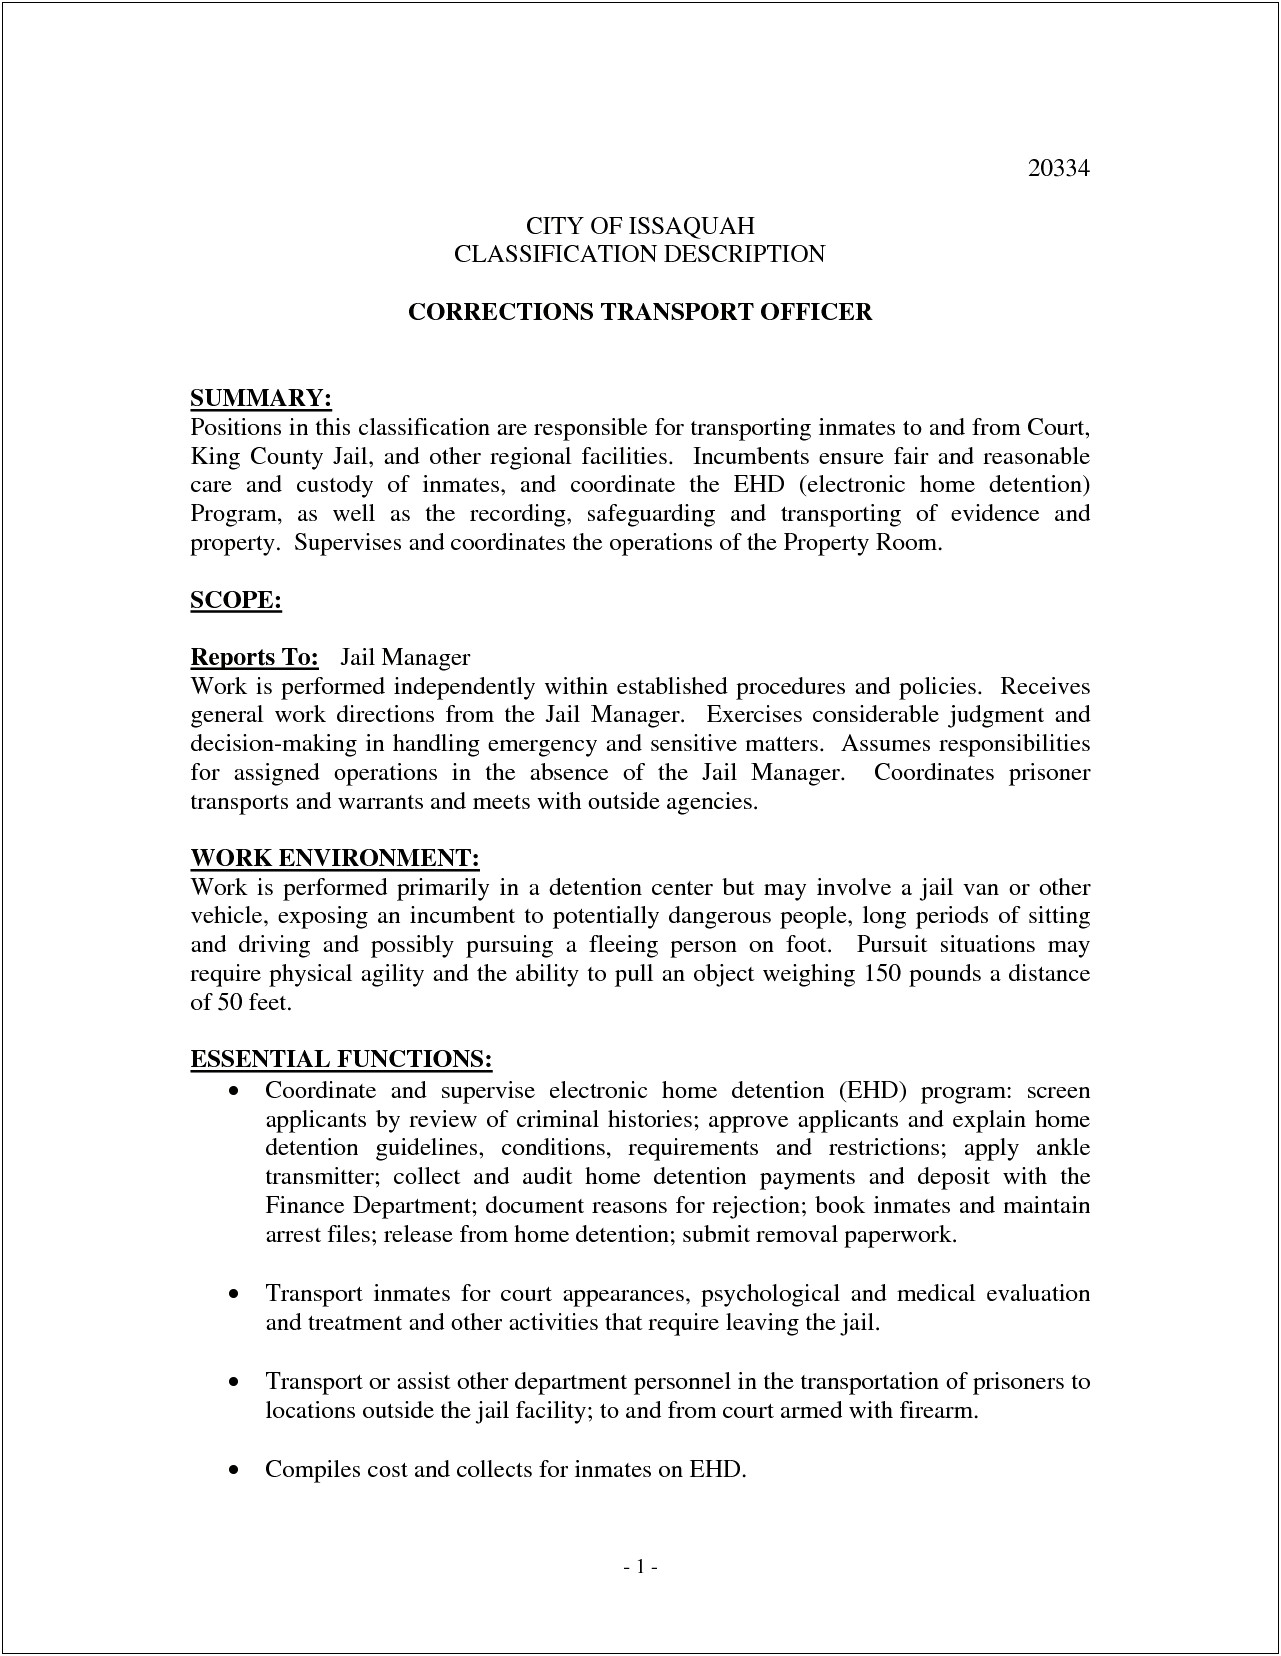 Corrections Officer Job Description For Resume